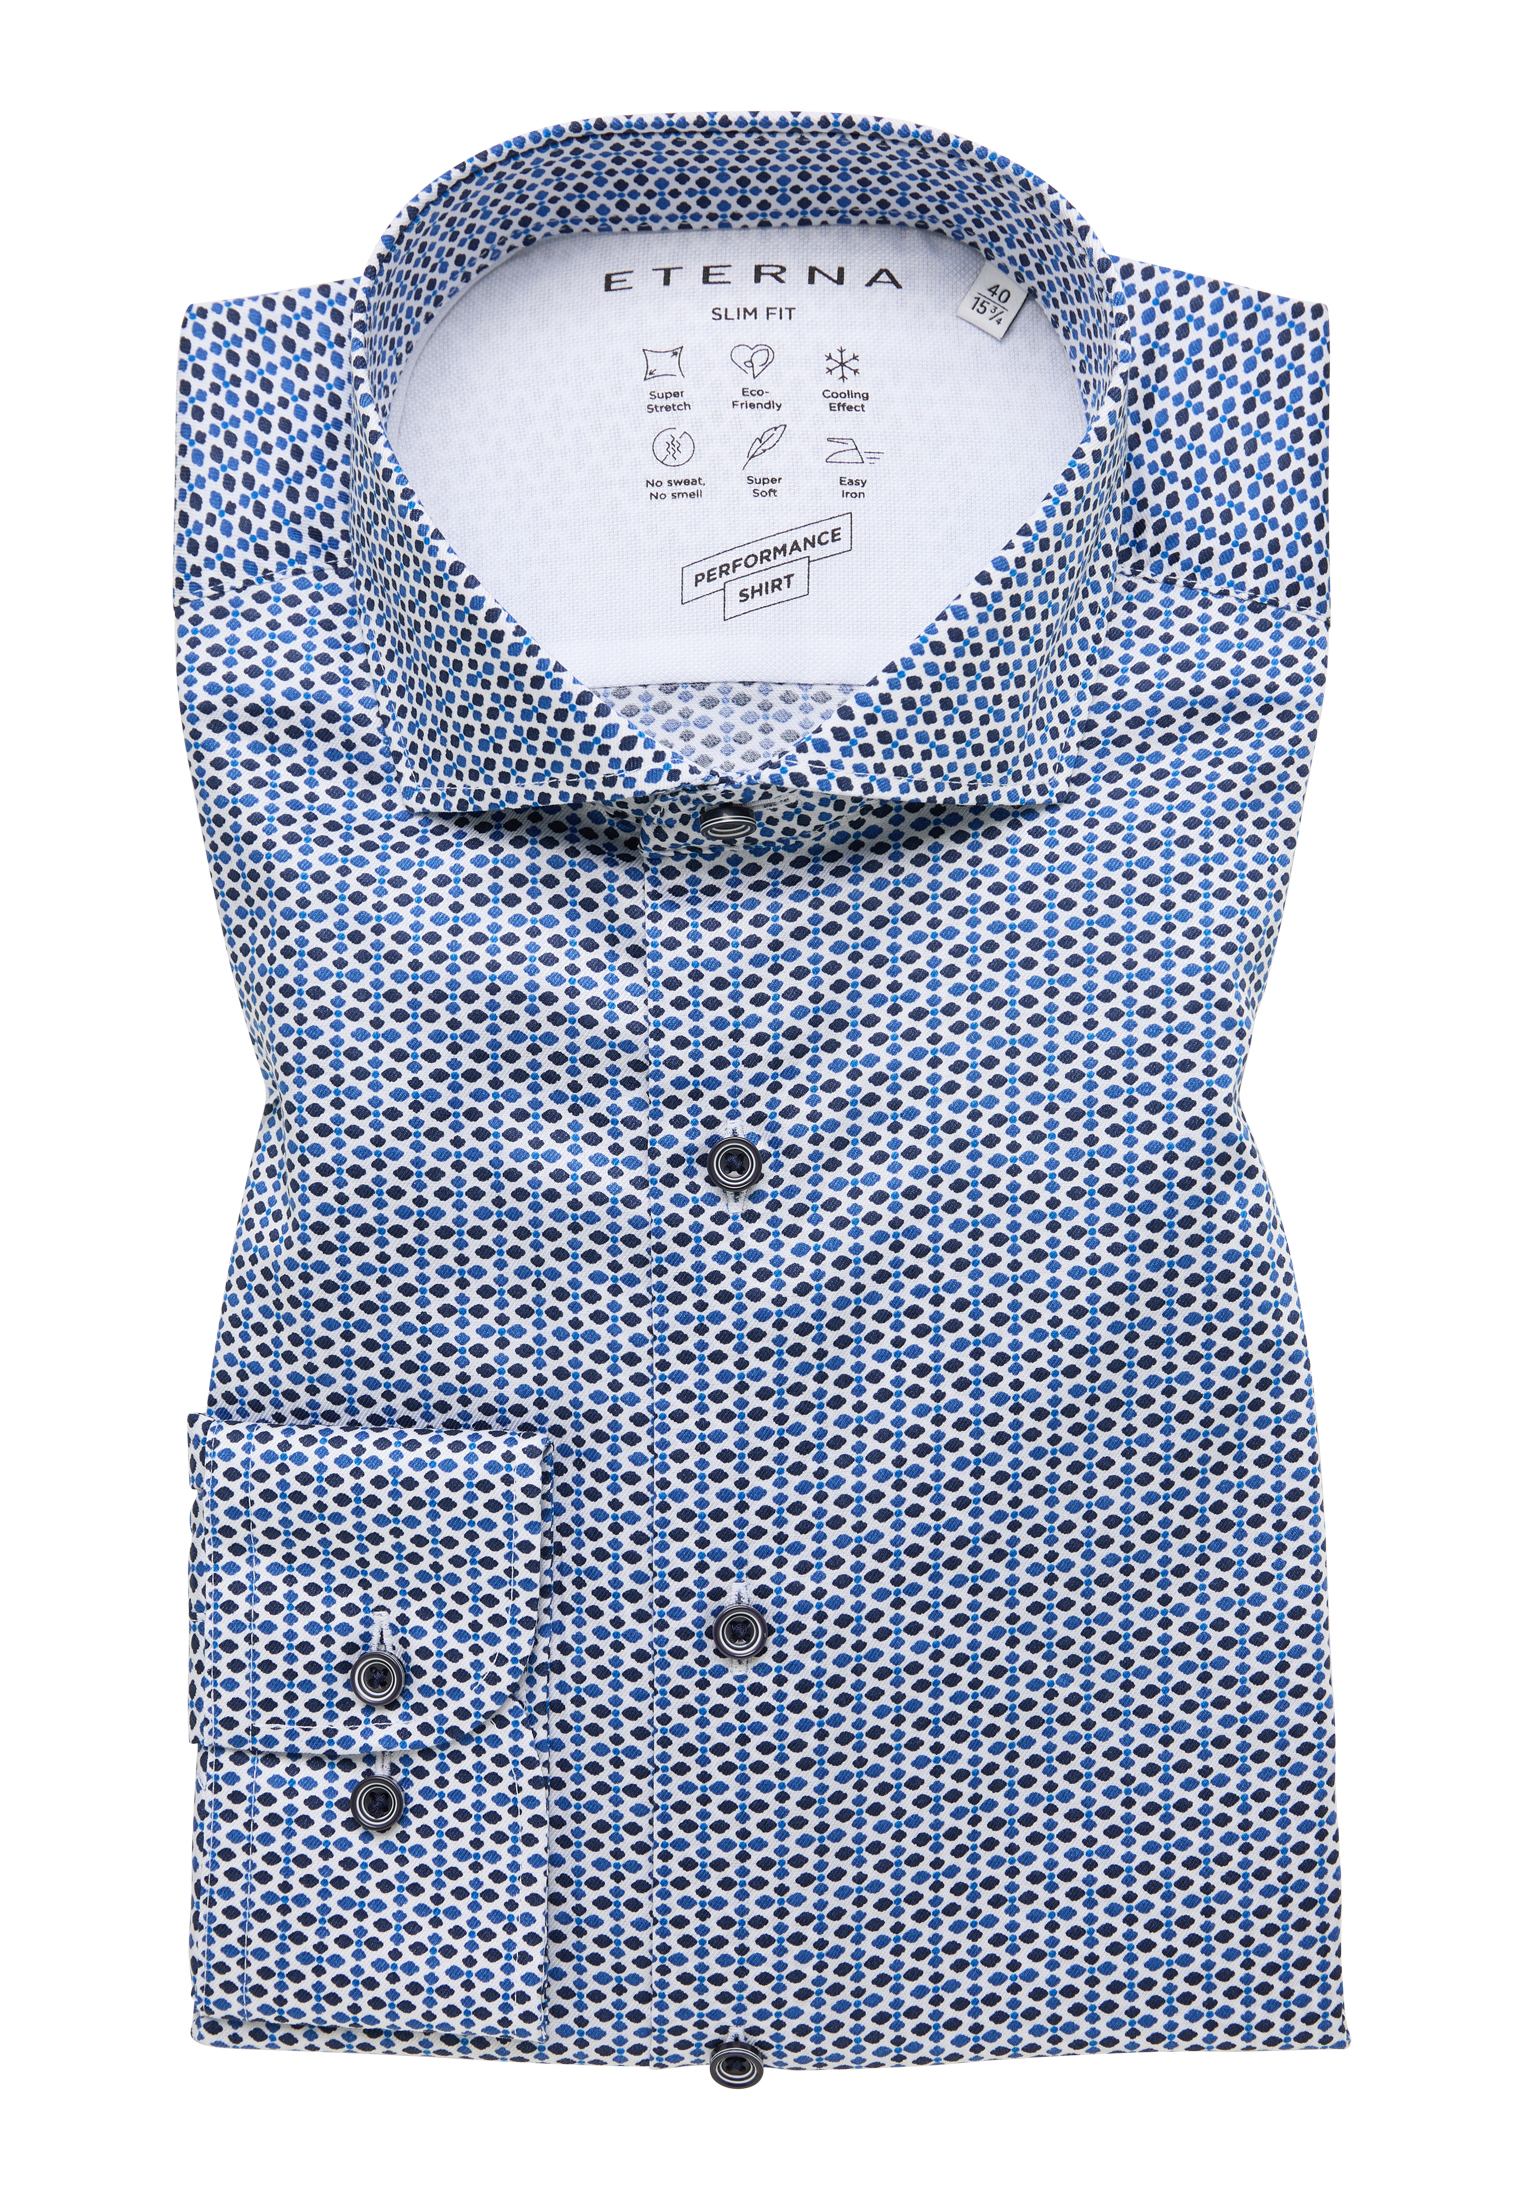 | SLIM Shirt Performance in bedruckt | | FIT | blau Langarm blau 1SH12682-01-41-38-1/1 38